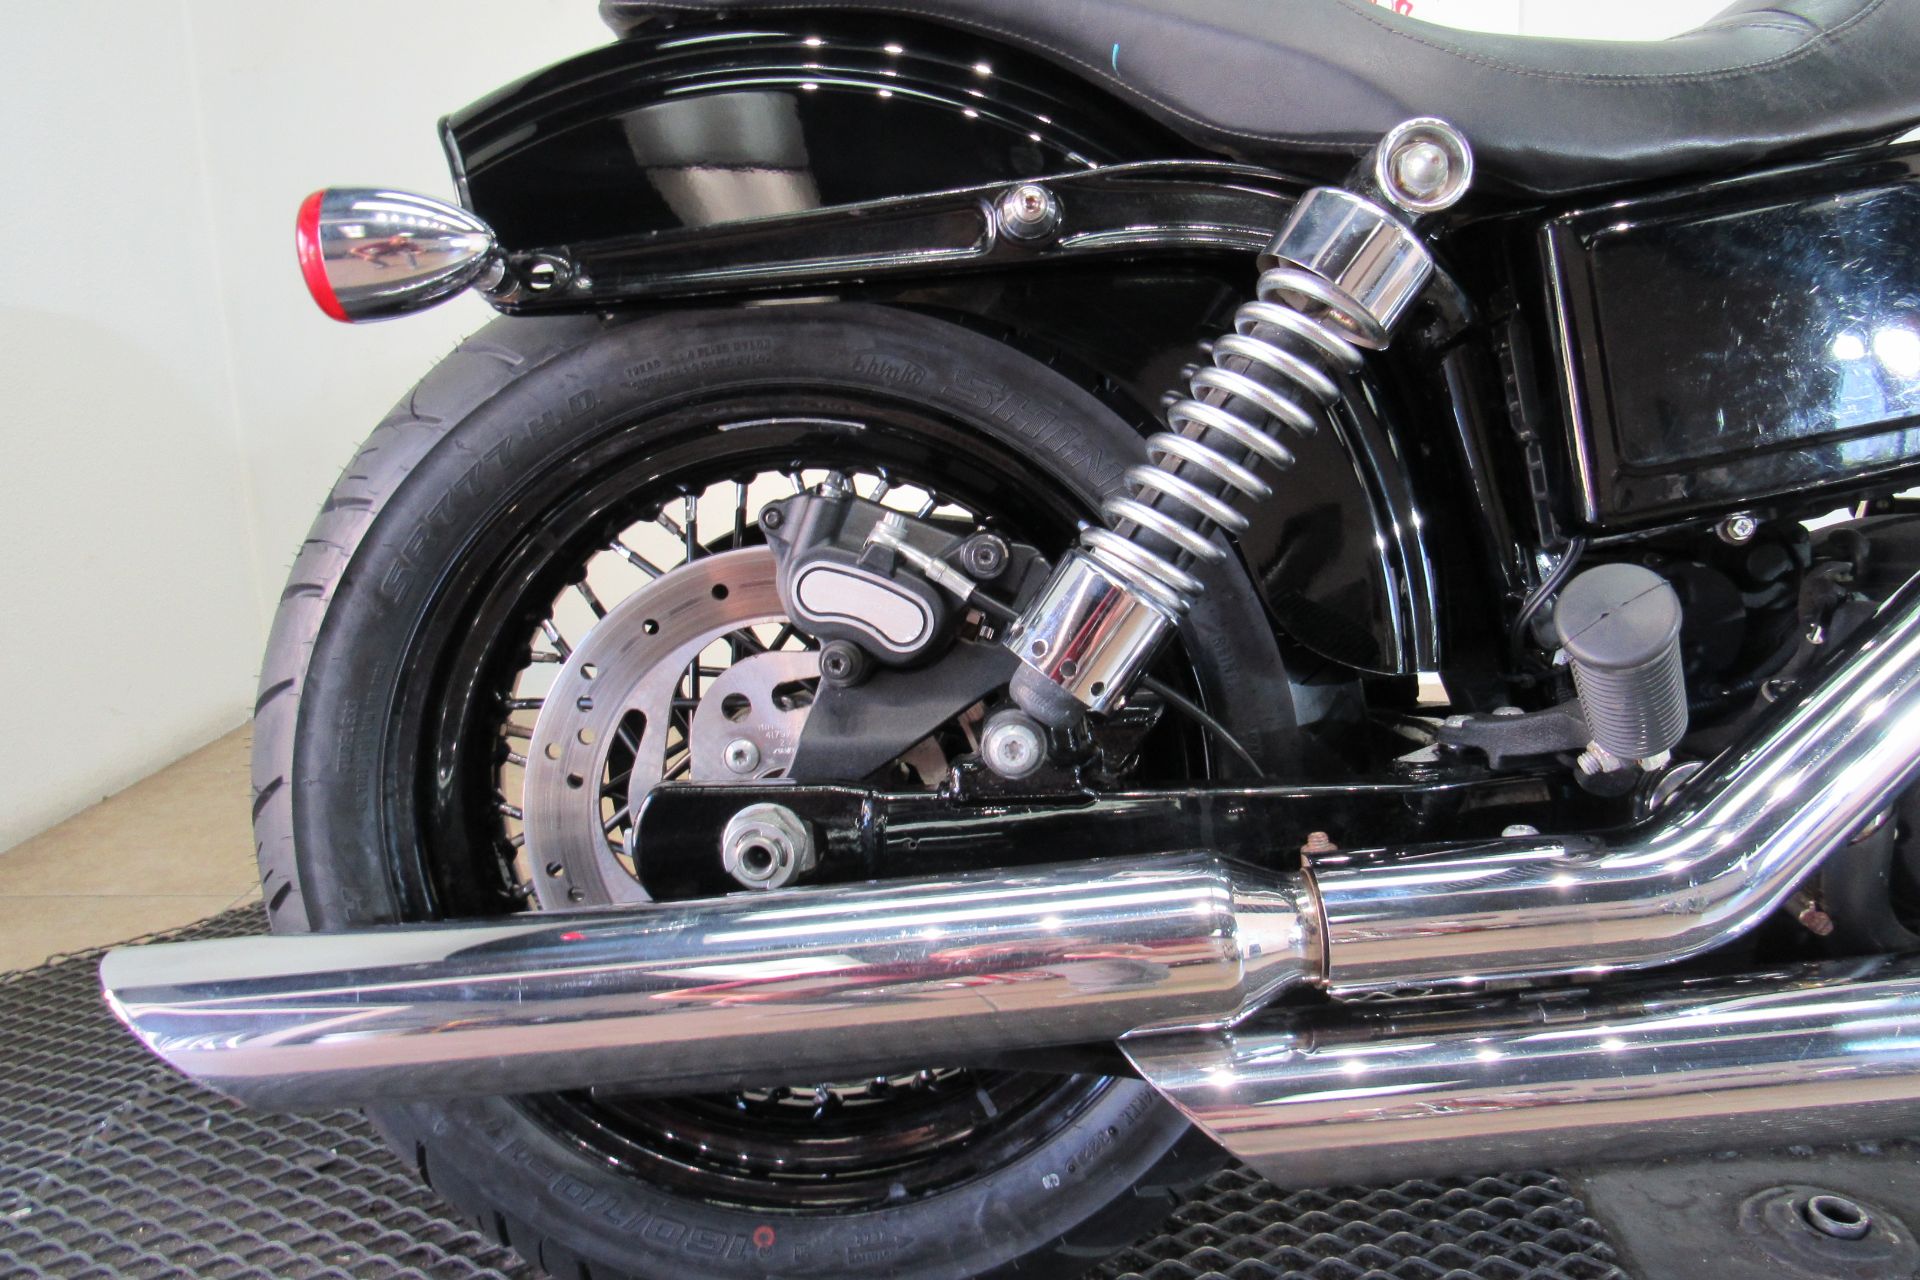 2013 Harley-Davidson Dyna® Street Bob® in Temecula, California - Photo 23